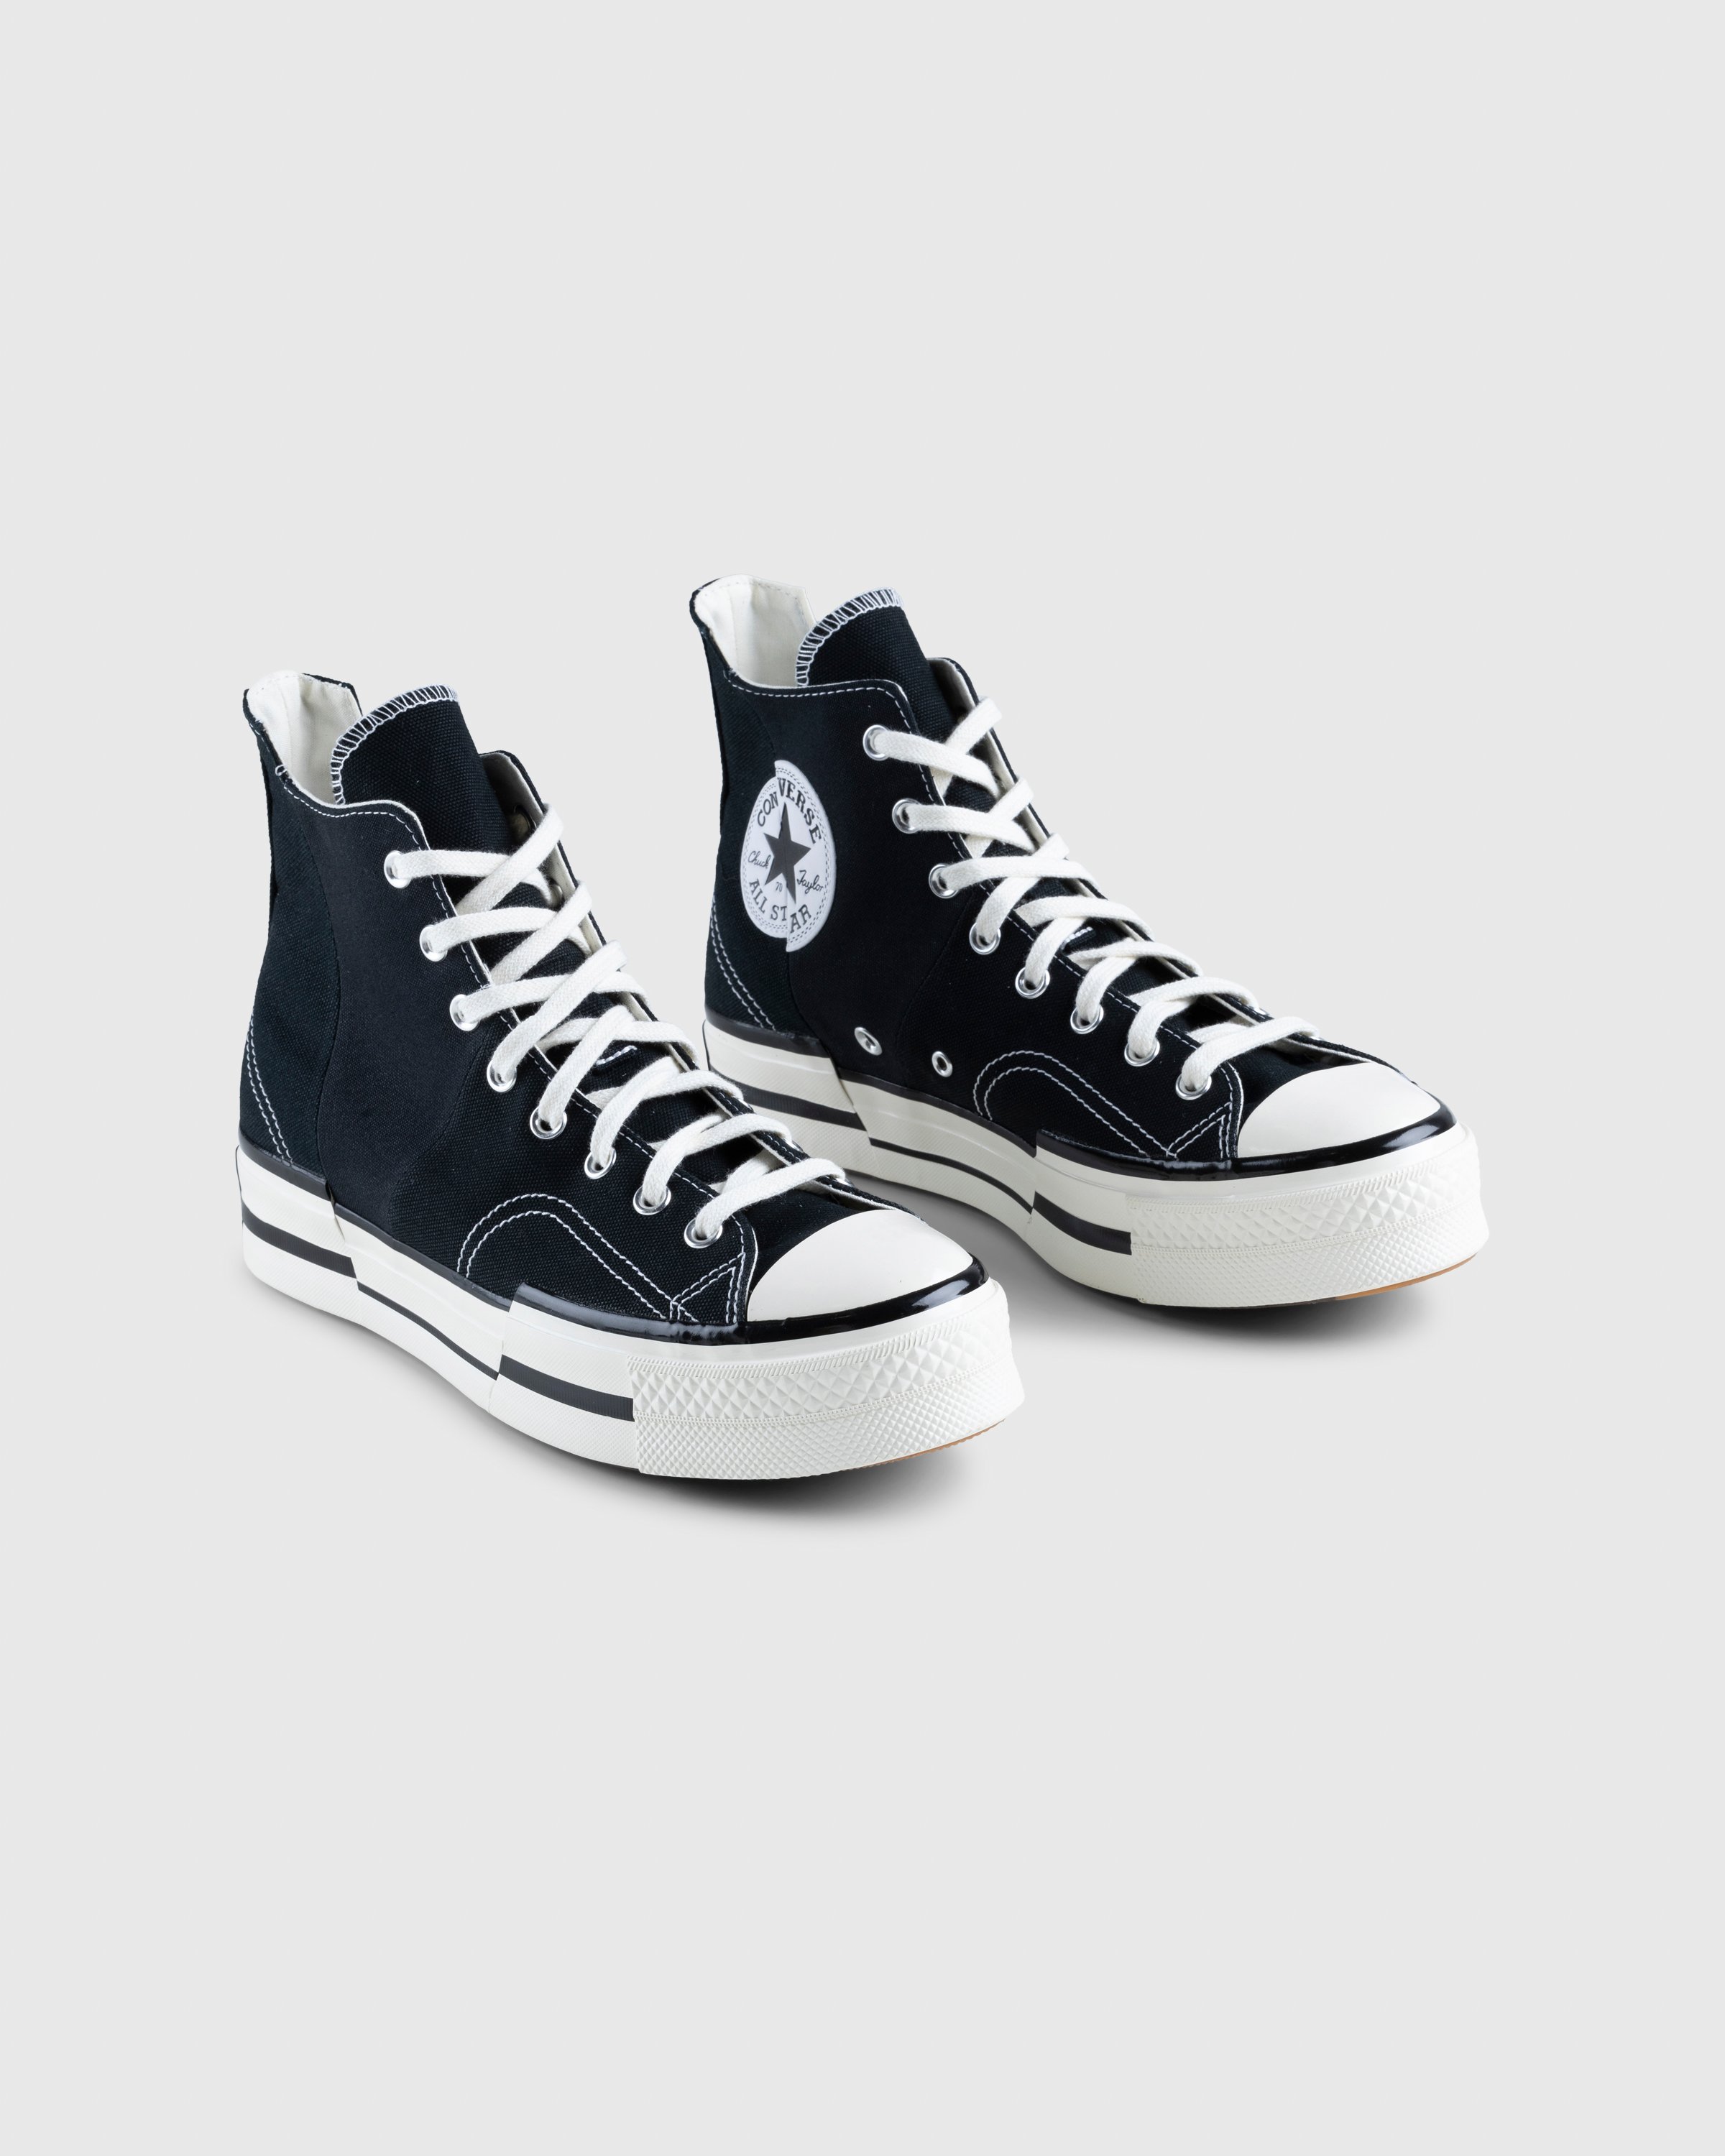 Converse - Chuck 70 Plus Canvas Black/Egret/Black - Footwear - Black - Image 3